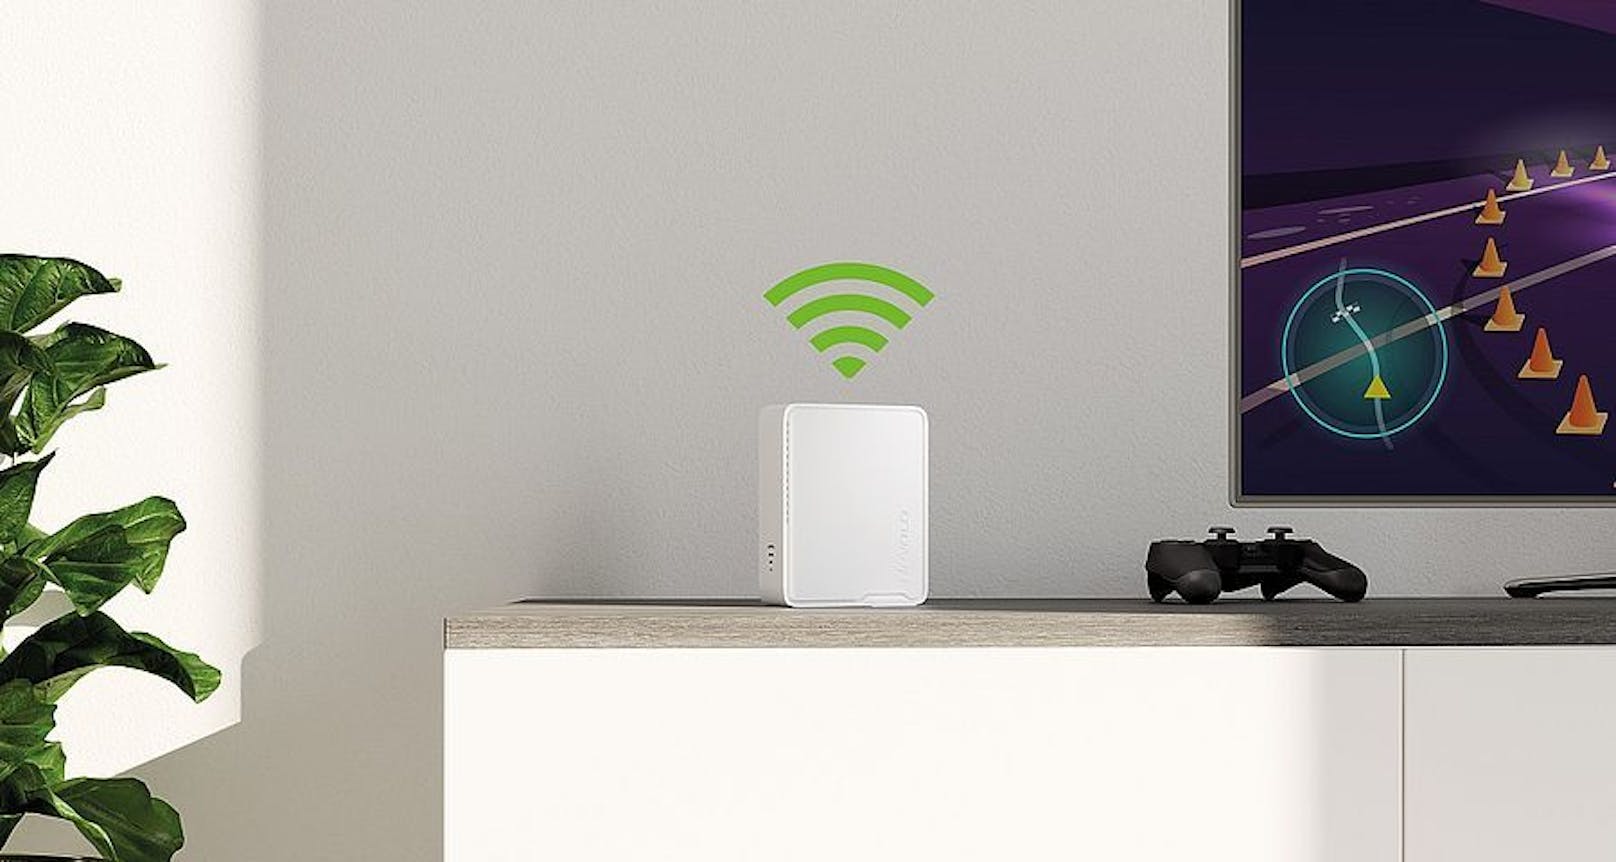 devolo präsentiert neue Mesh-WLAN-Repeater mit WiFi 6.